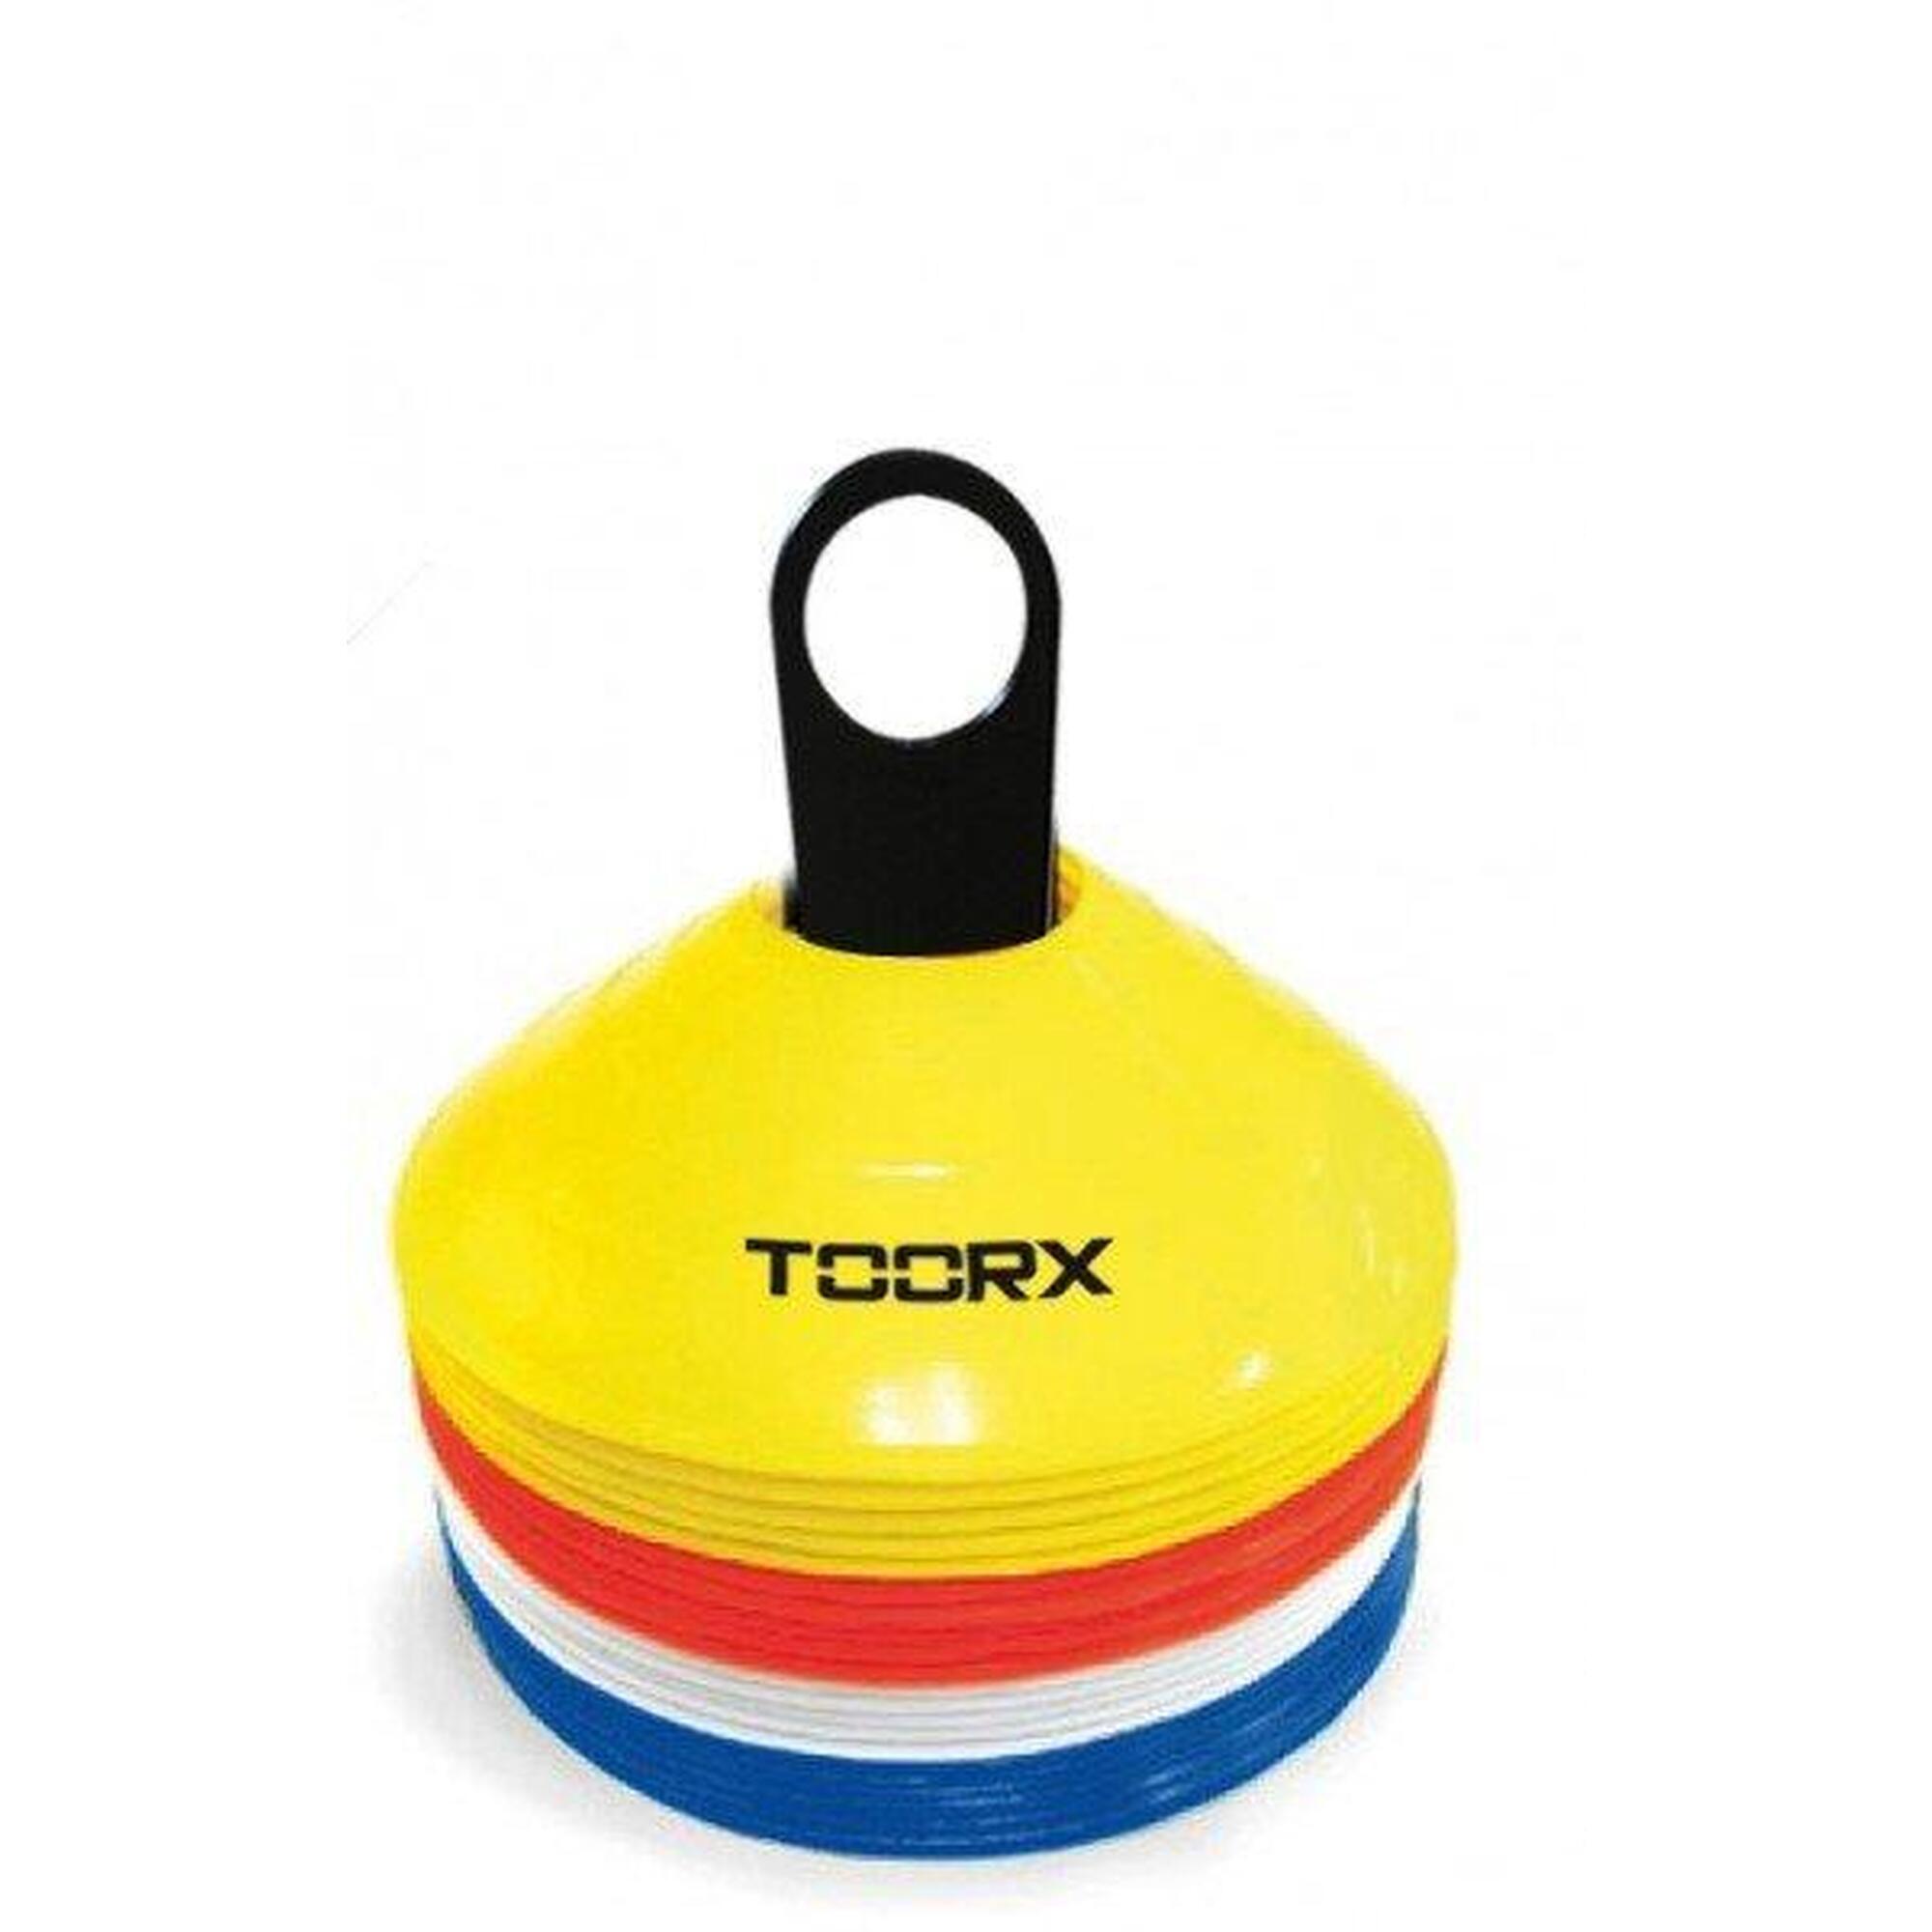 Toorx Agility Cones Set van 24 stuks - met rek - Geel/Rood/Wit/Blauw